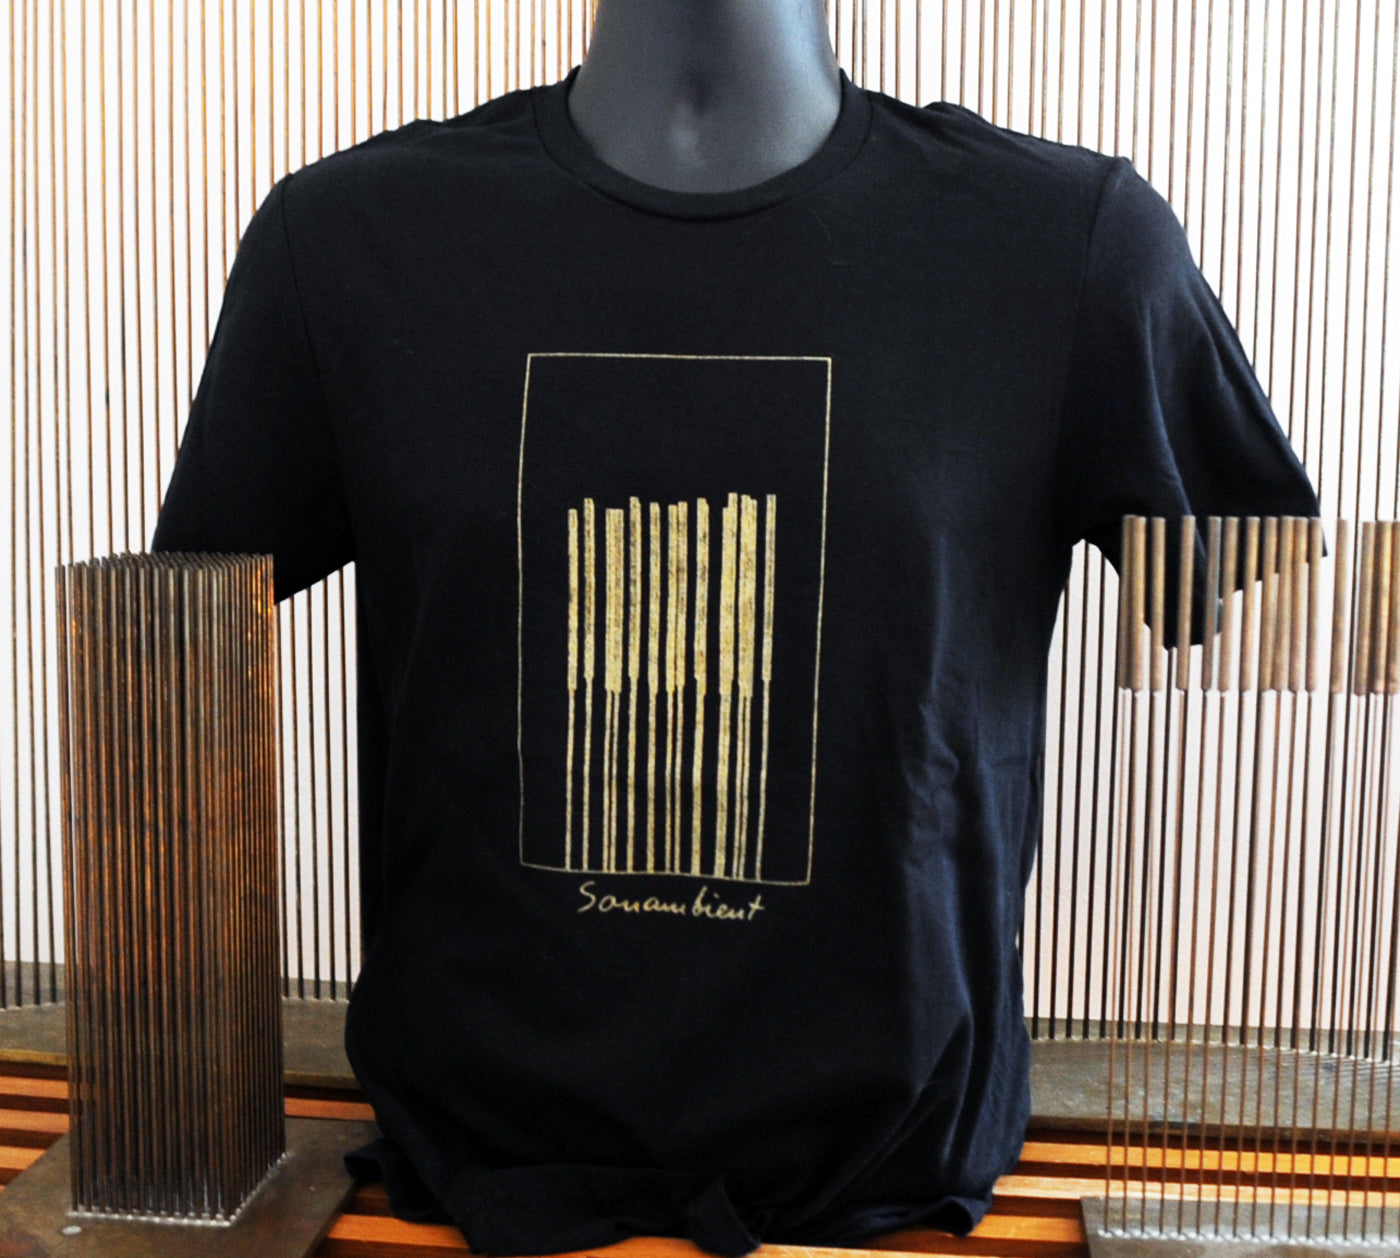 Sonambient Tape Archive - Logo Shirt - Metallic Shimmer Gold Print